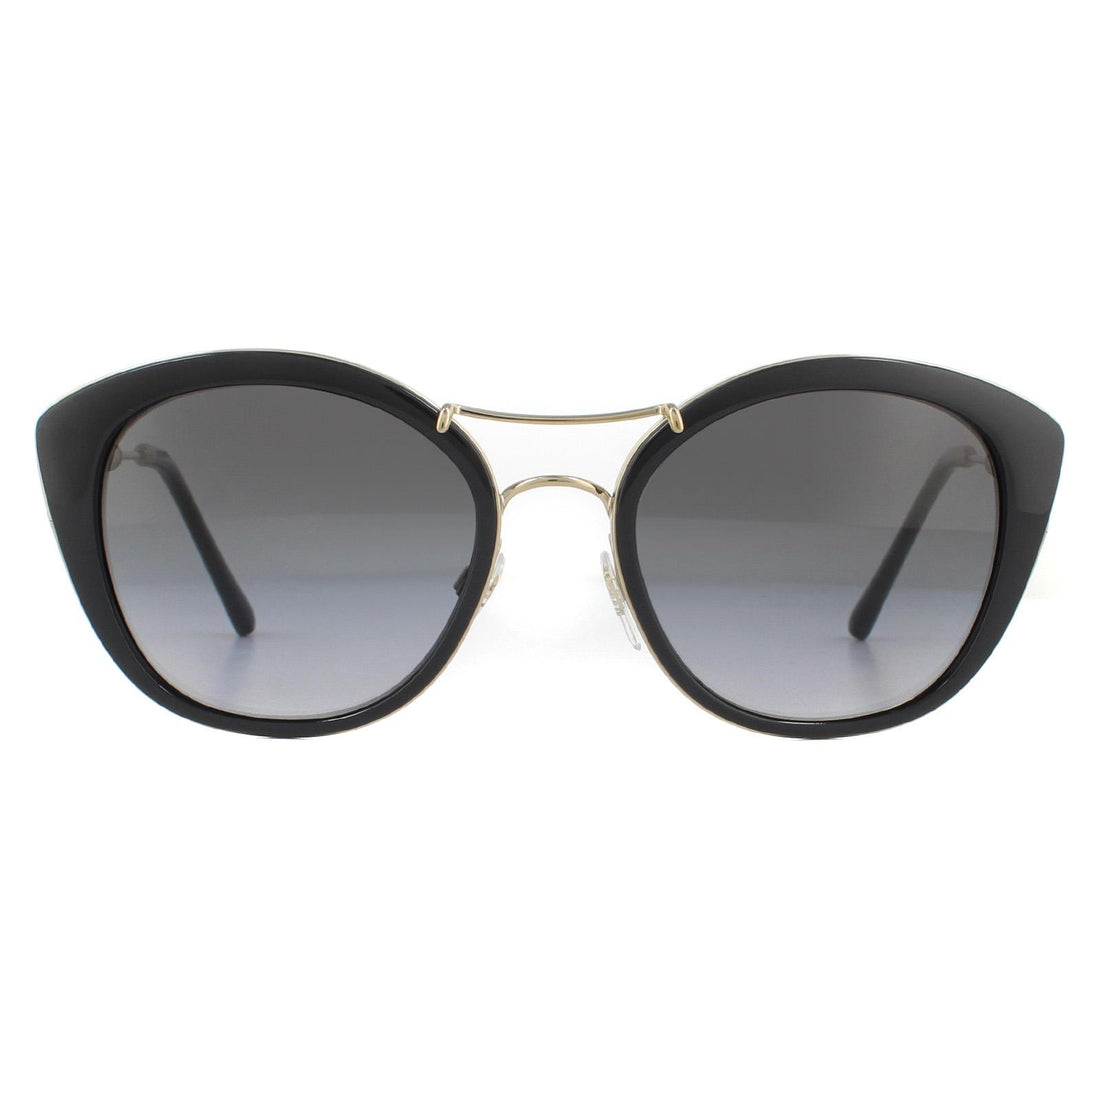 Burberry BE4251Q Sunglasses Black / Grey Gradient Polarized